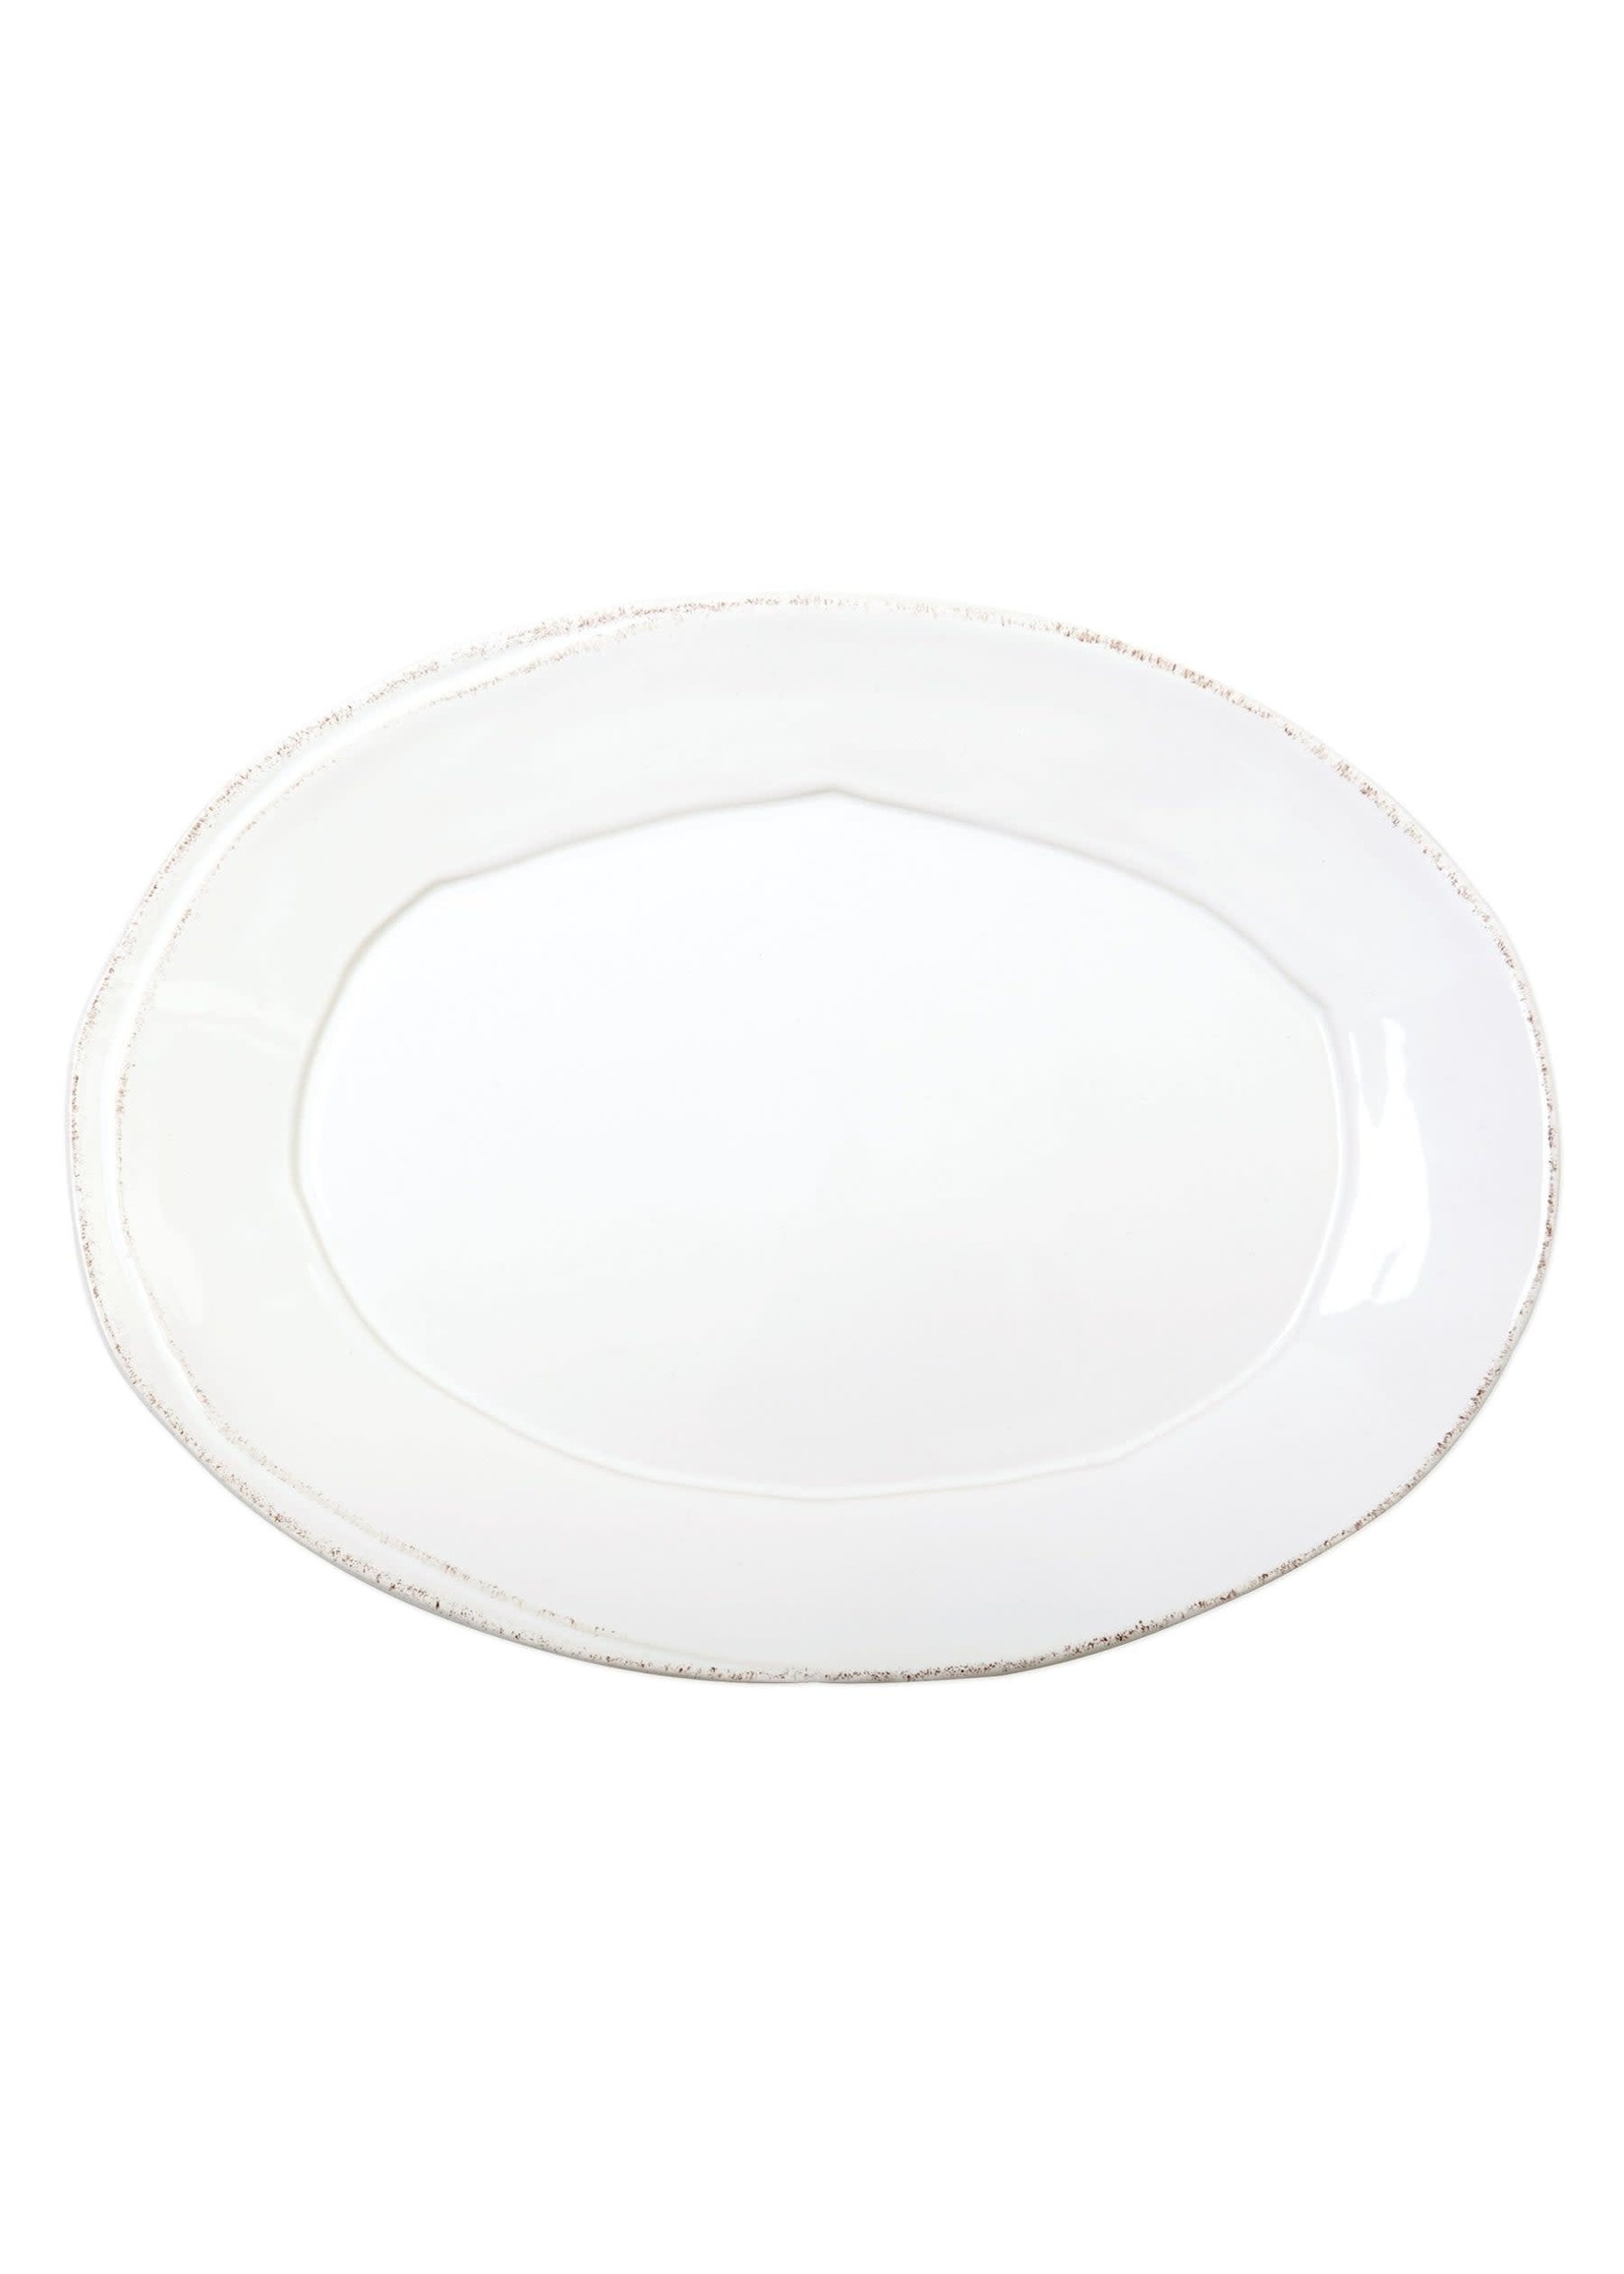 Vietri Lastra White SM Oval Platter